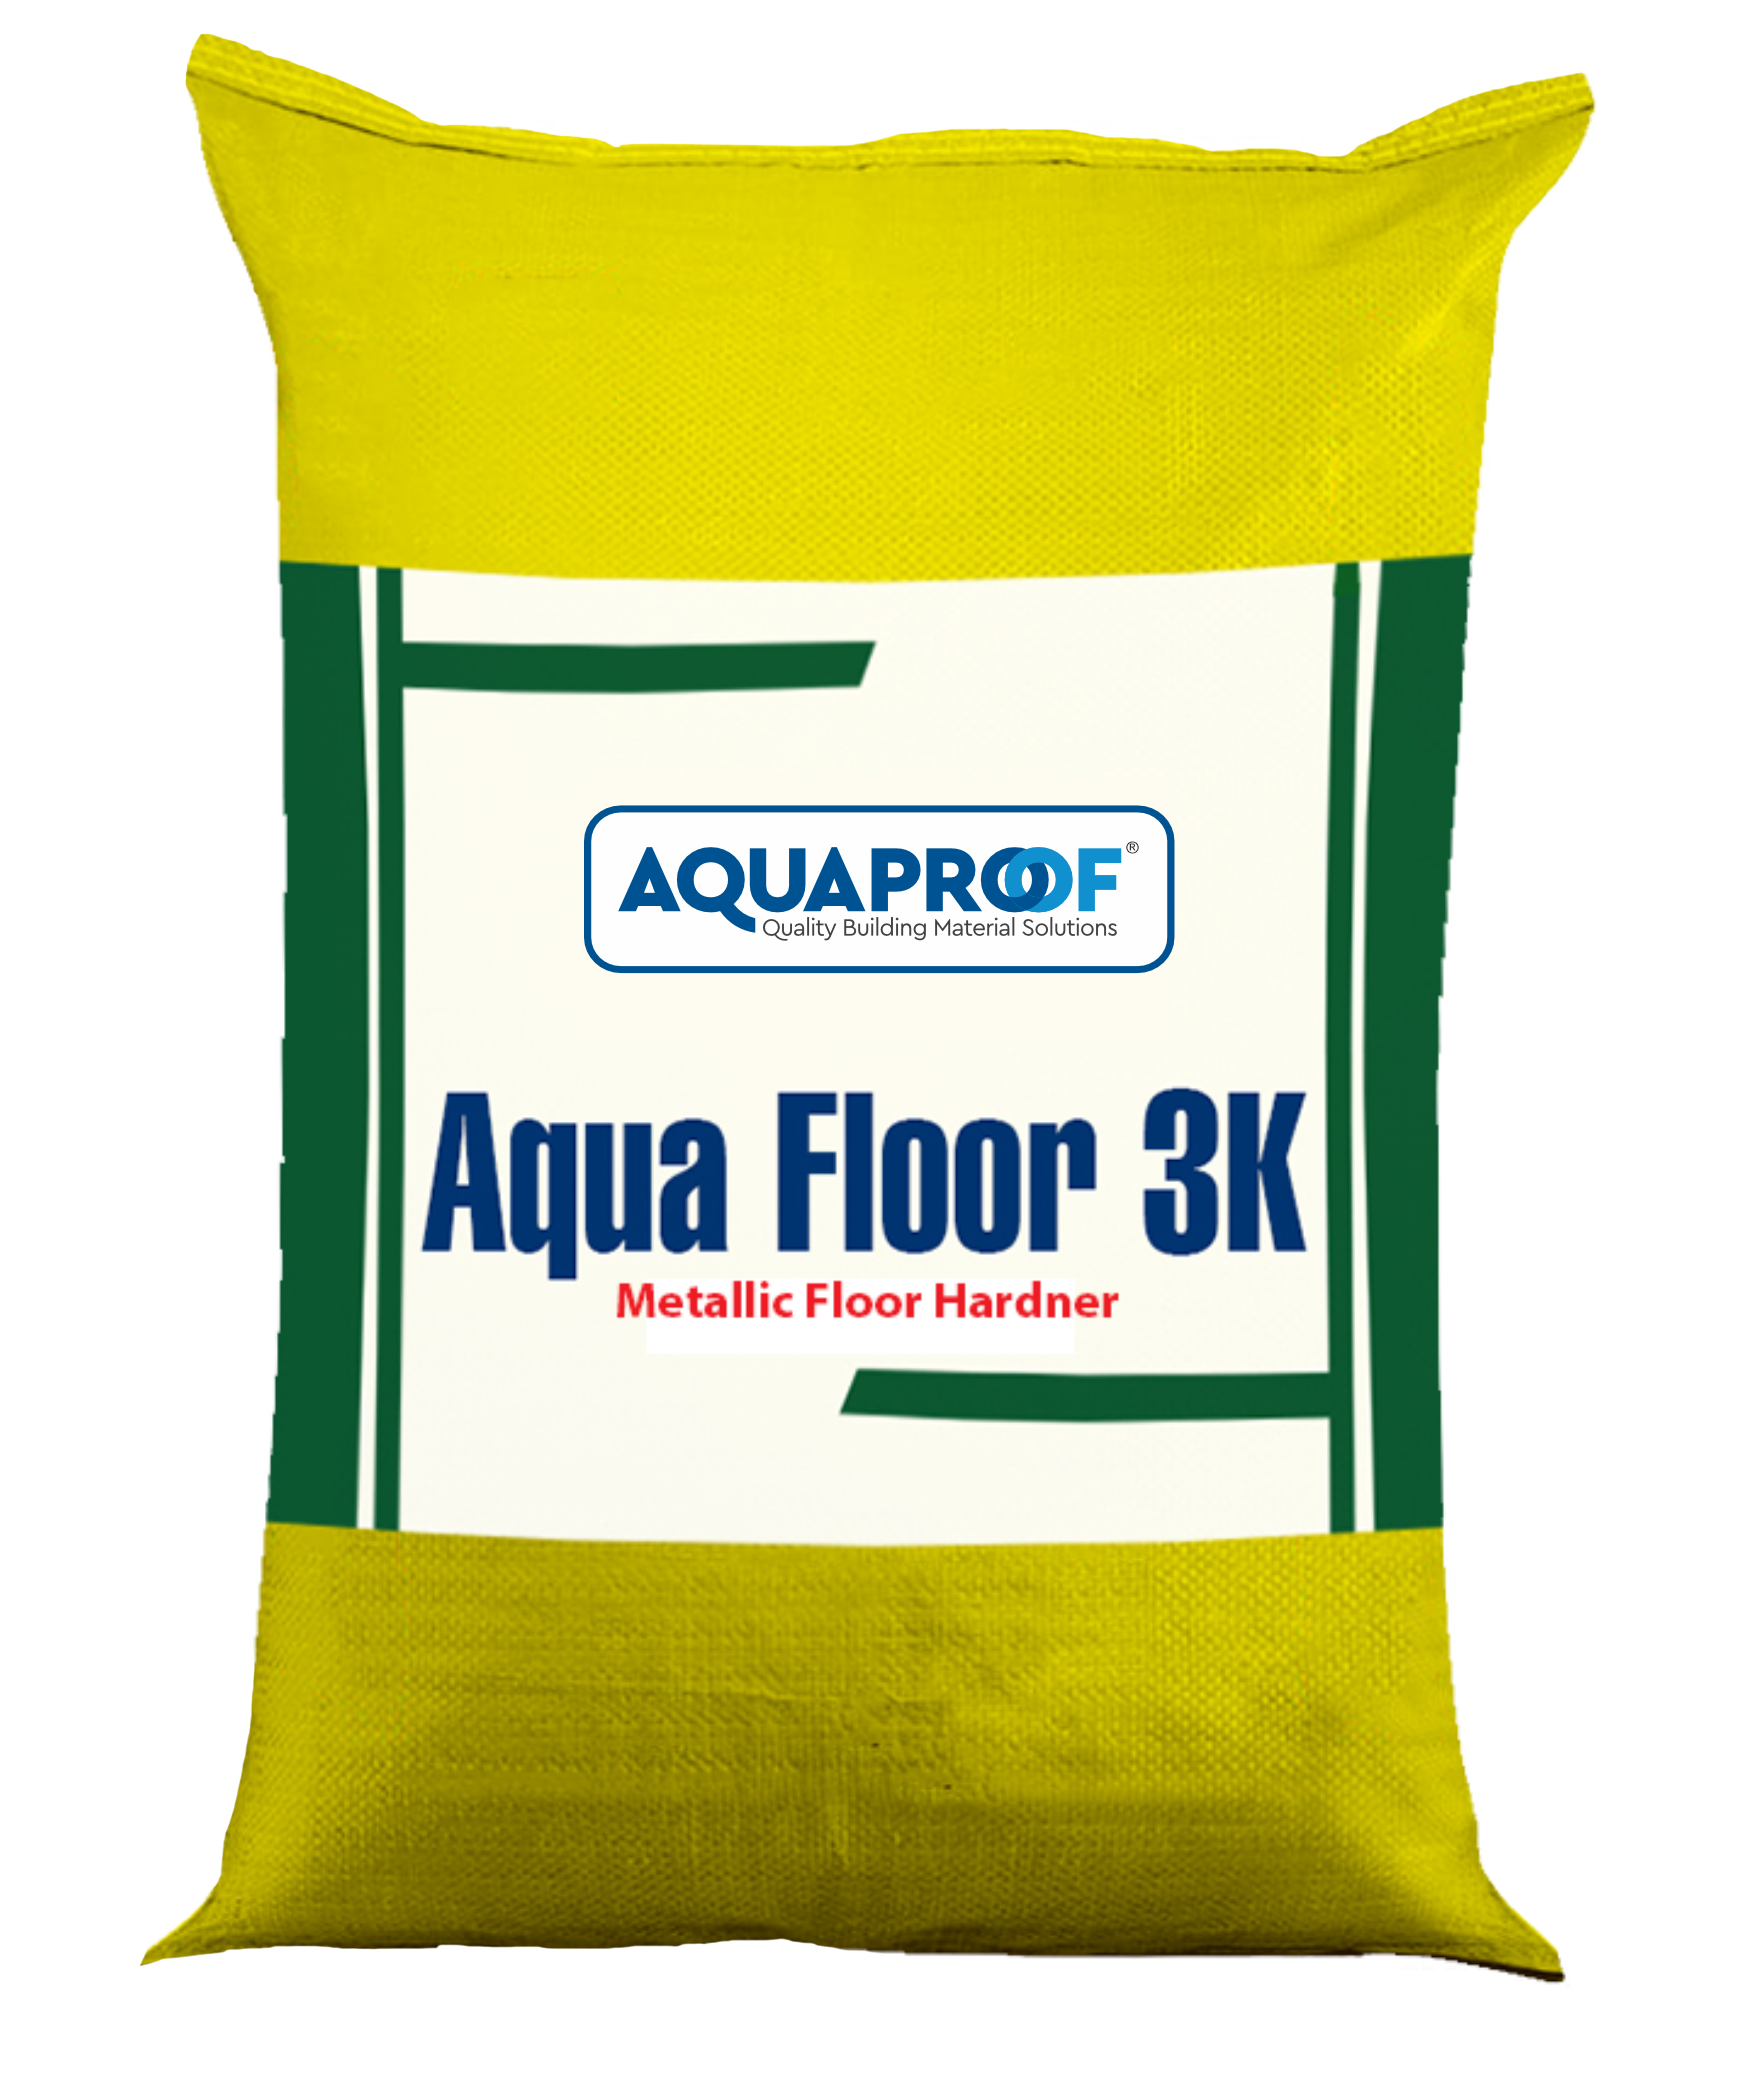 Aquafloor 3K